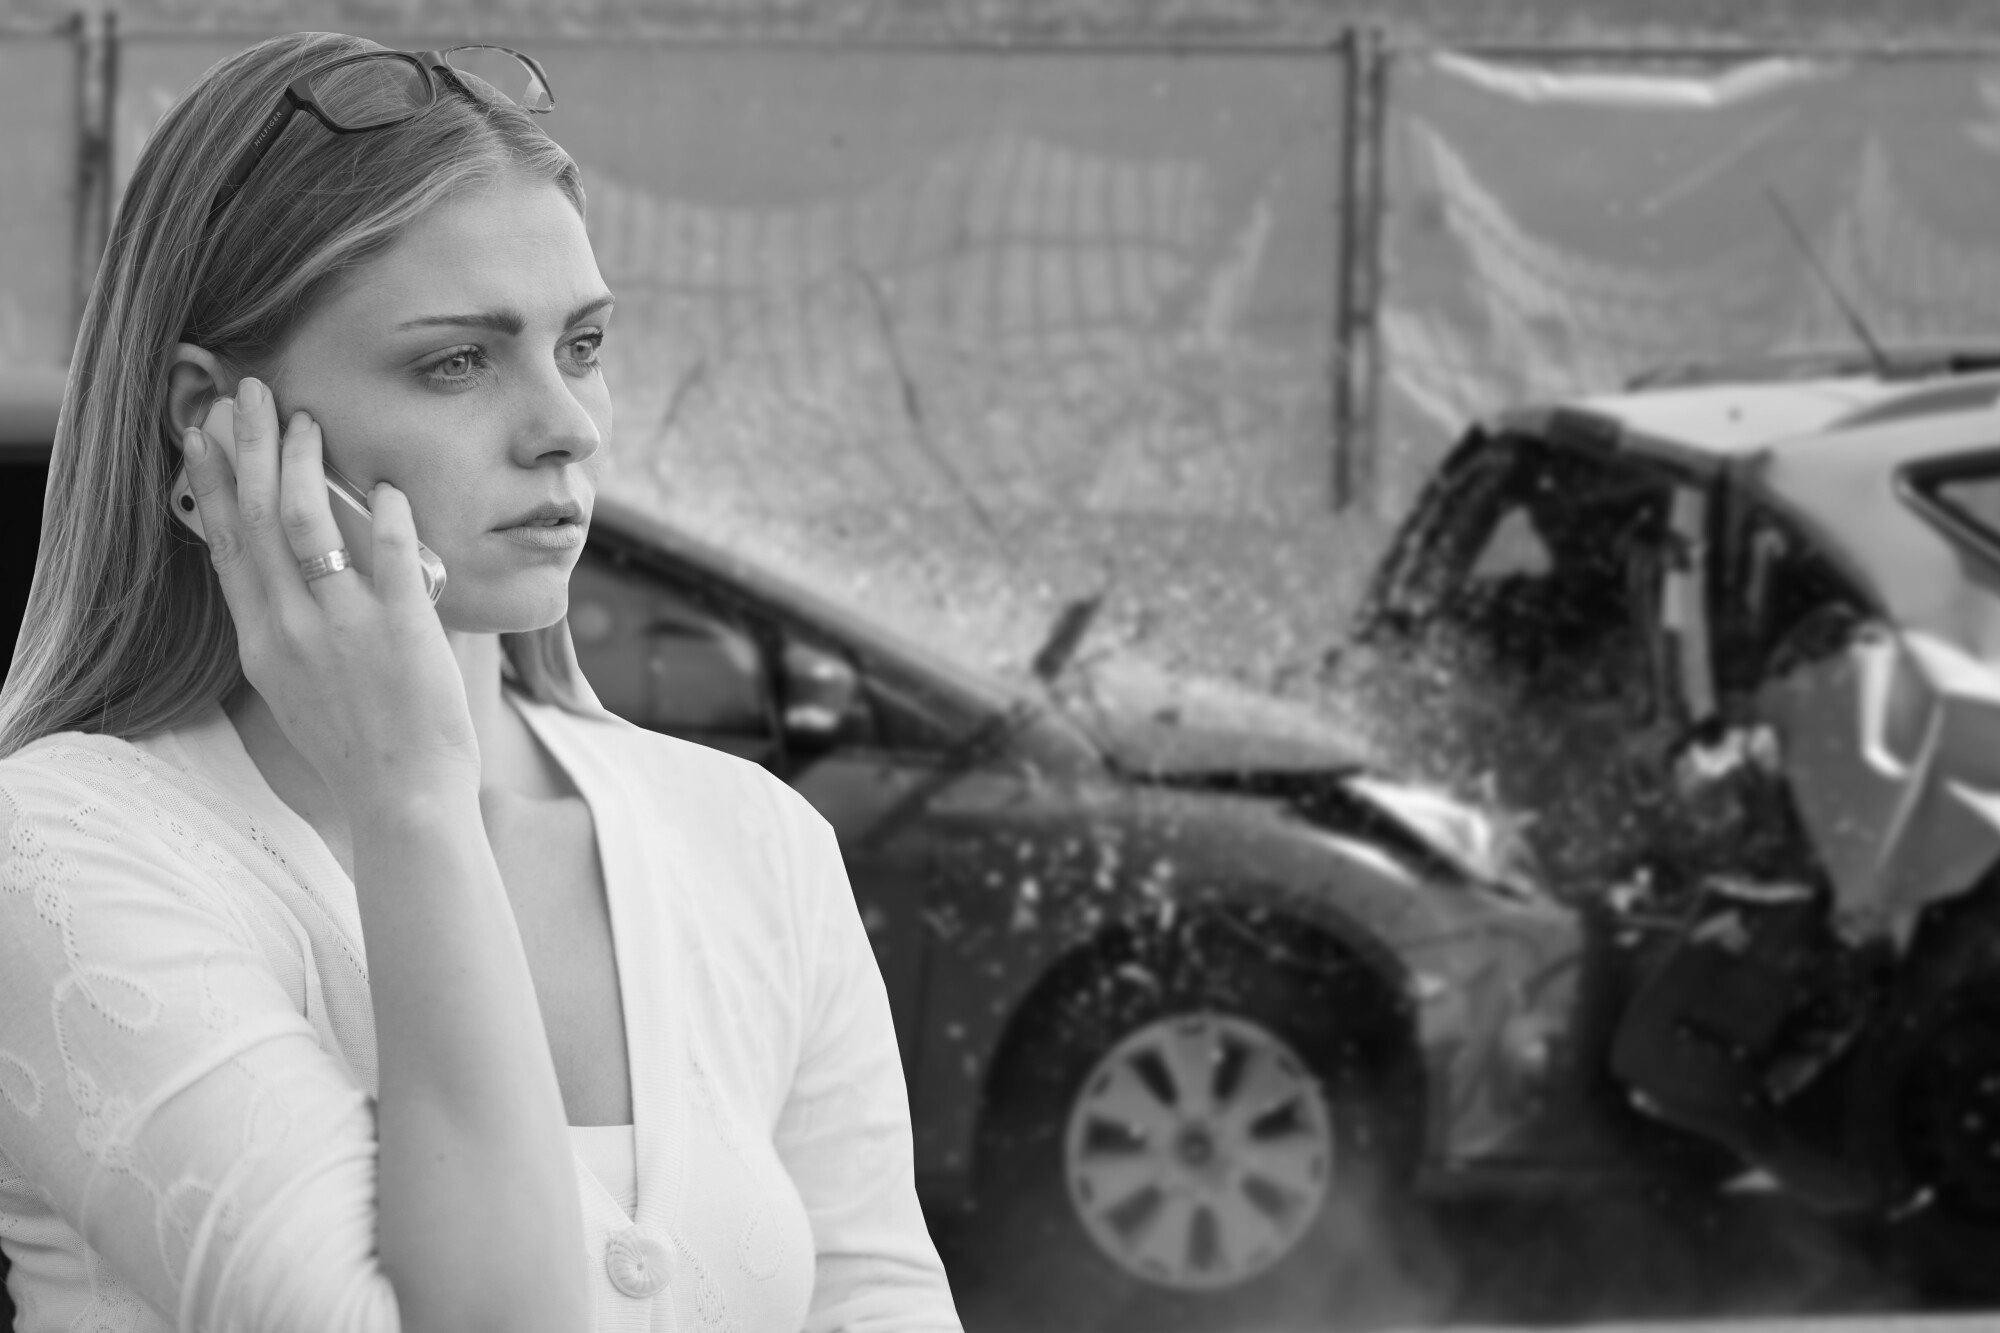 Woman on phone following a car crash.